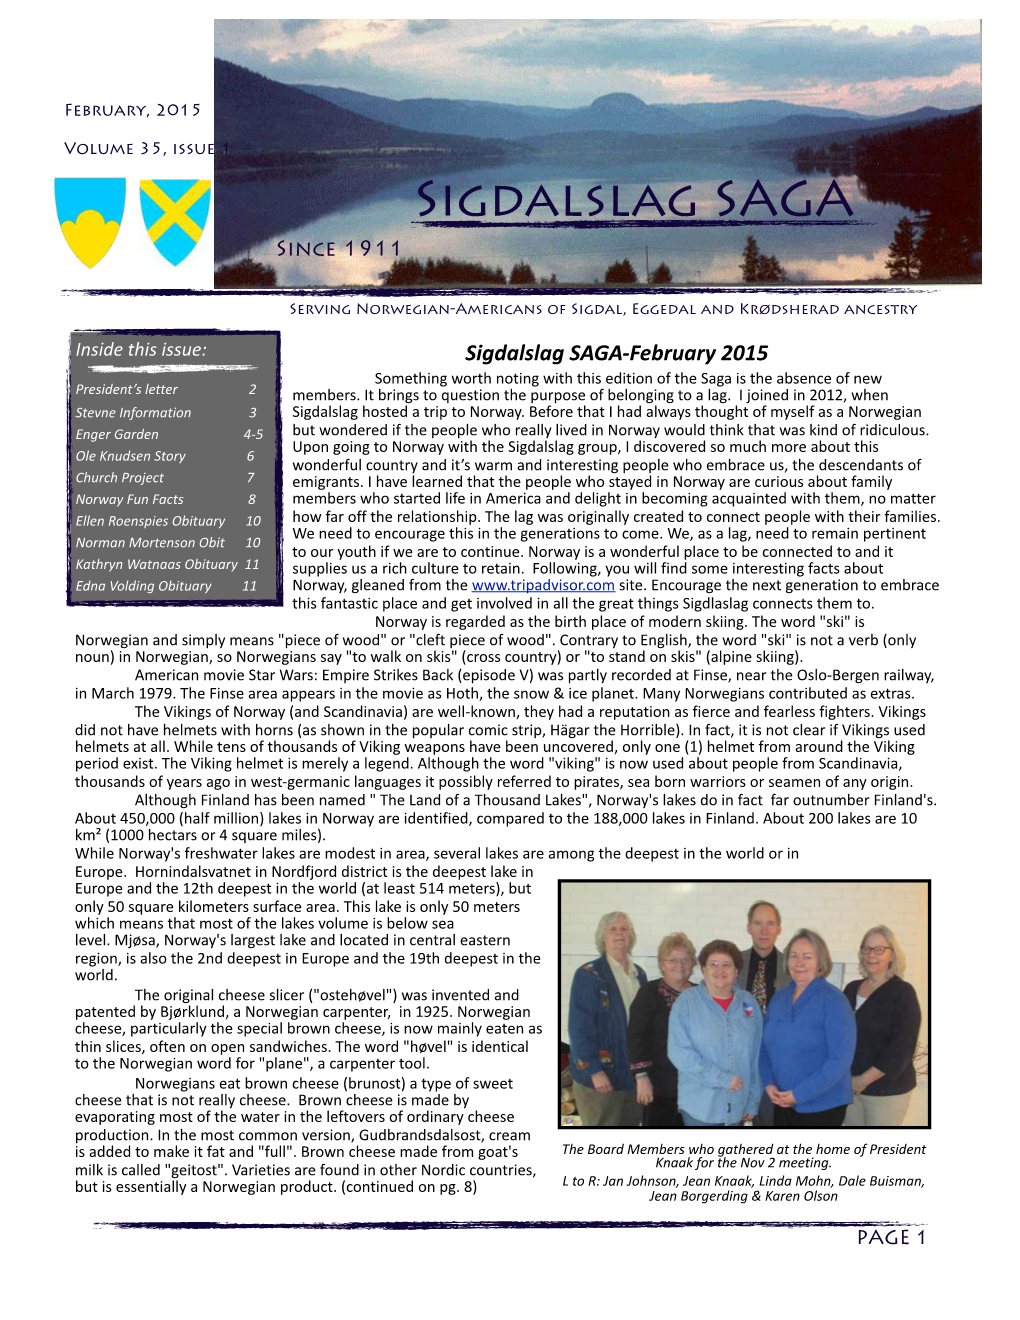 Sigdalslag Saga Volume 35, Issue 1